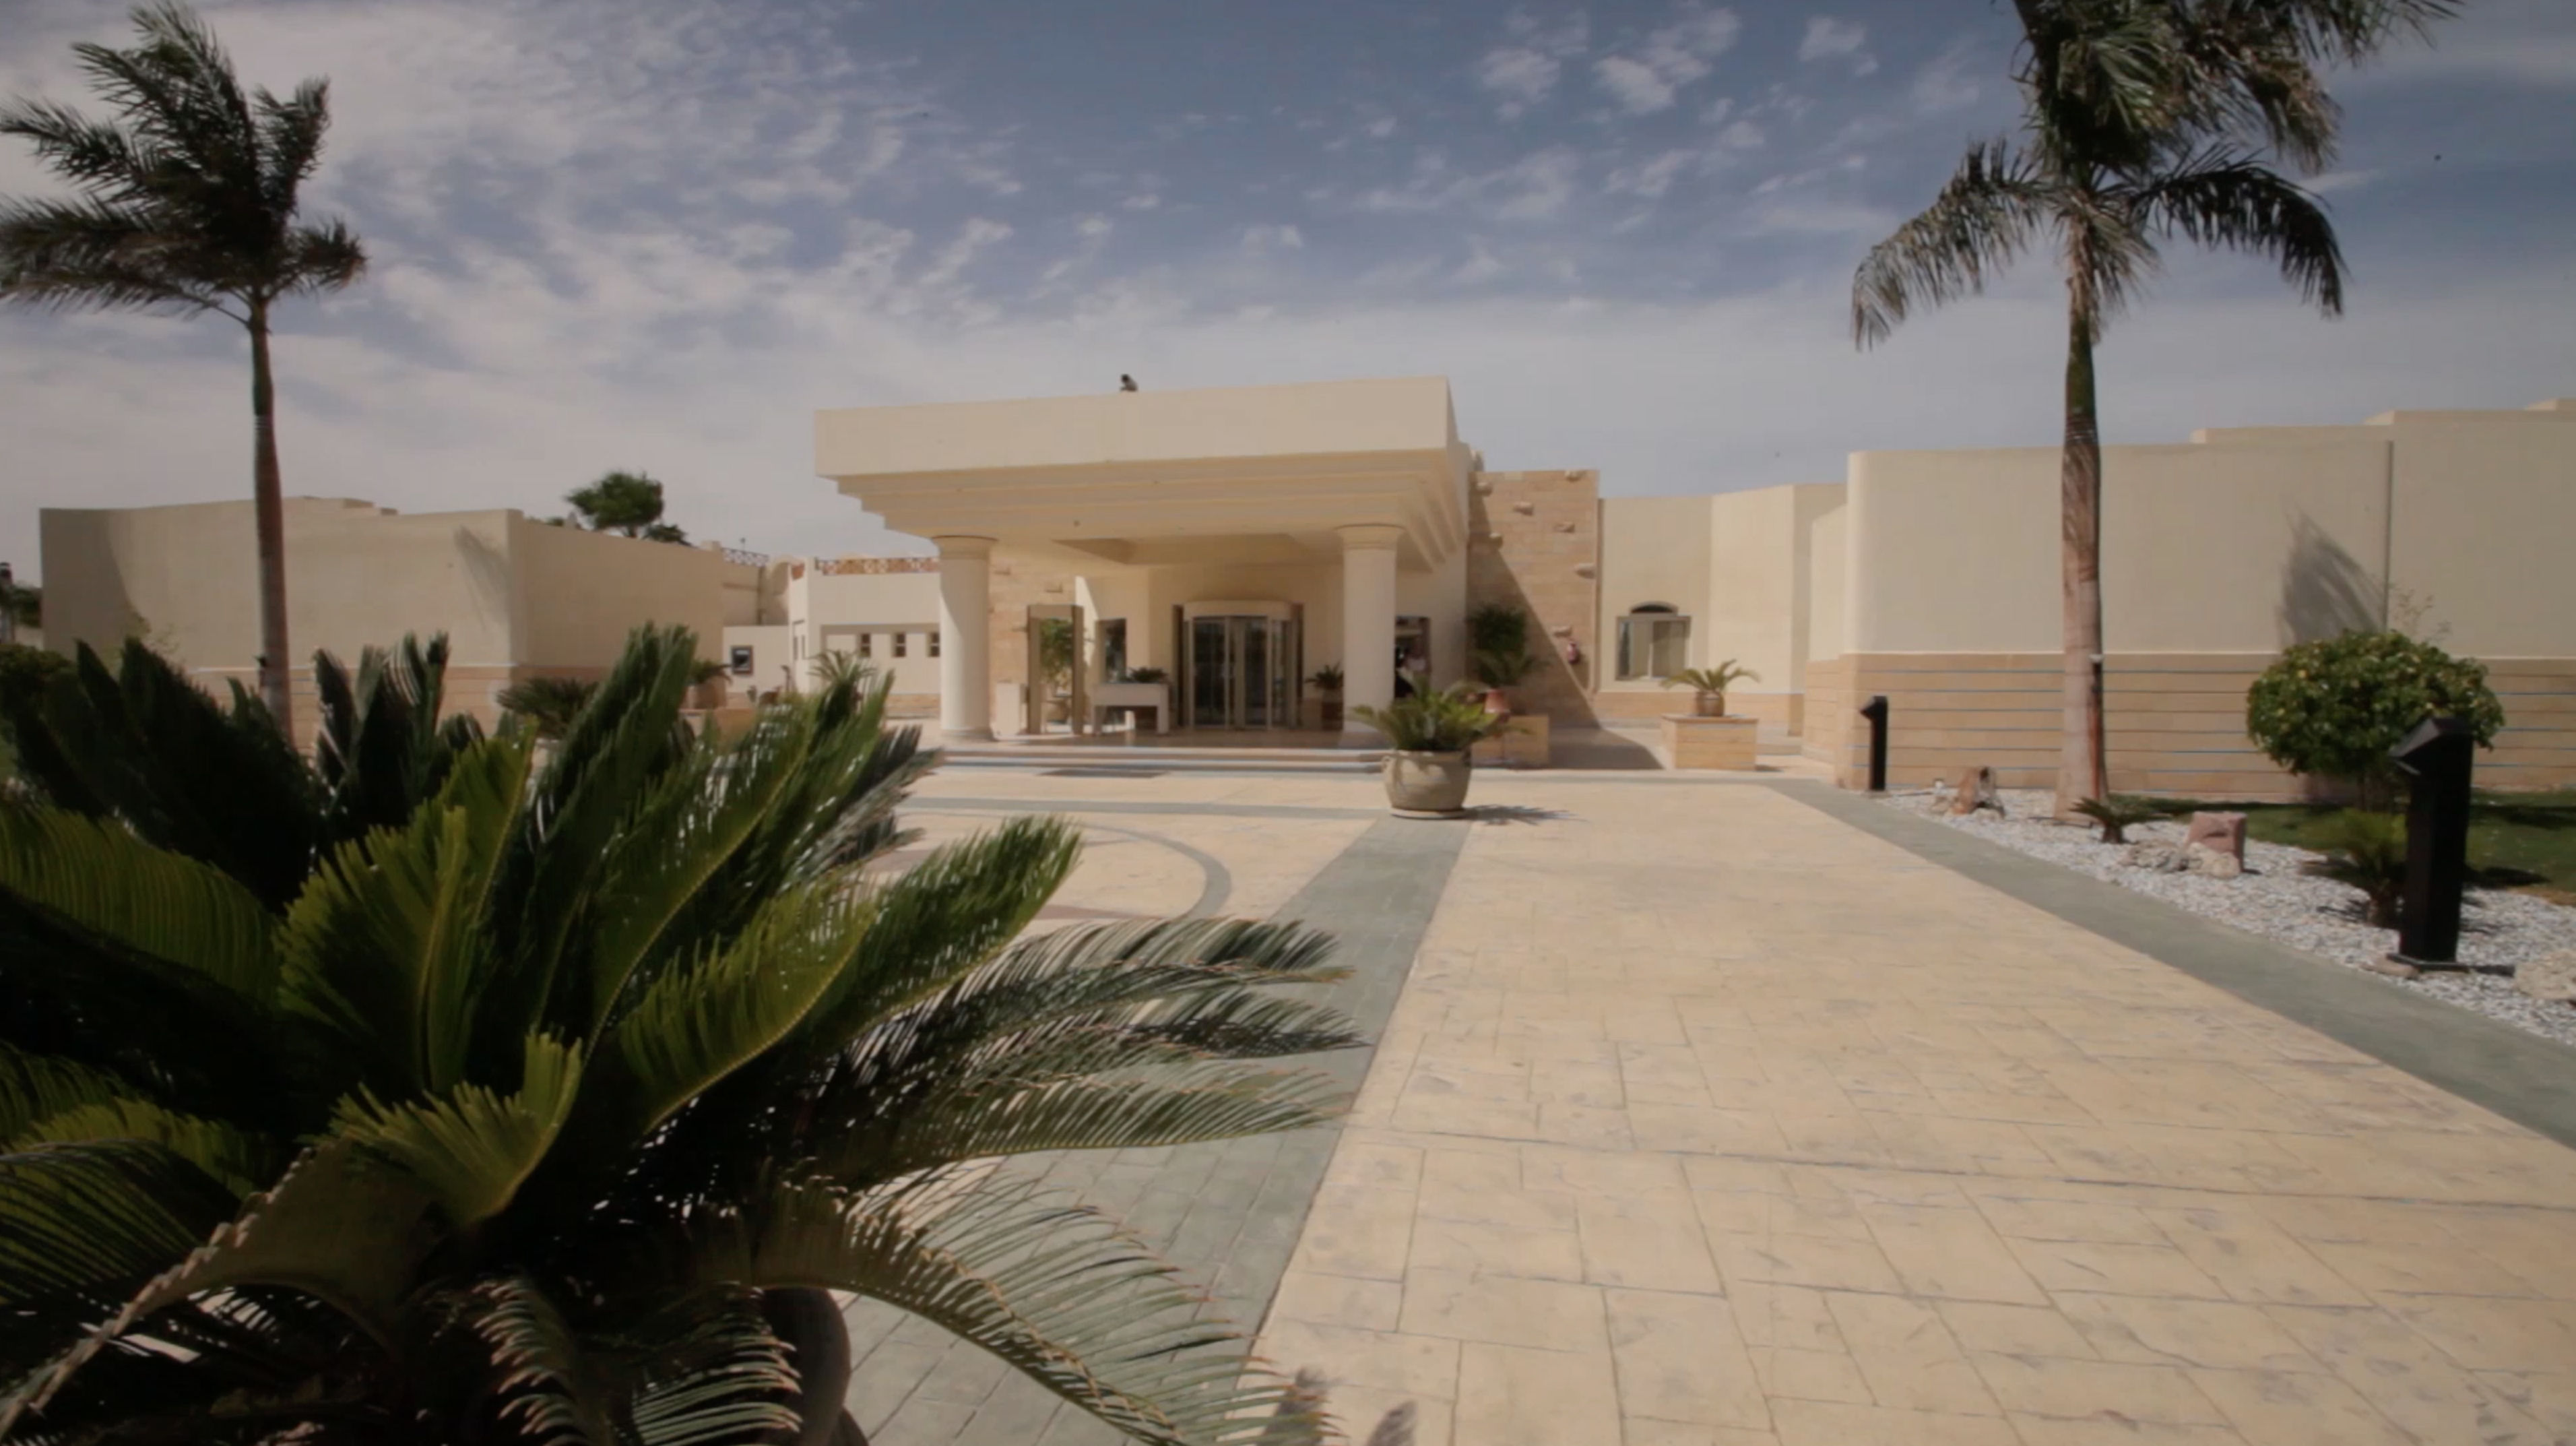 Hurghada Coral Beach Hotel